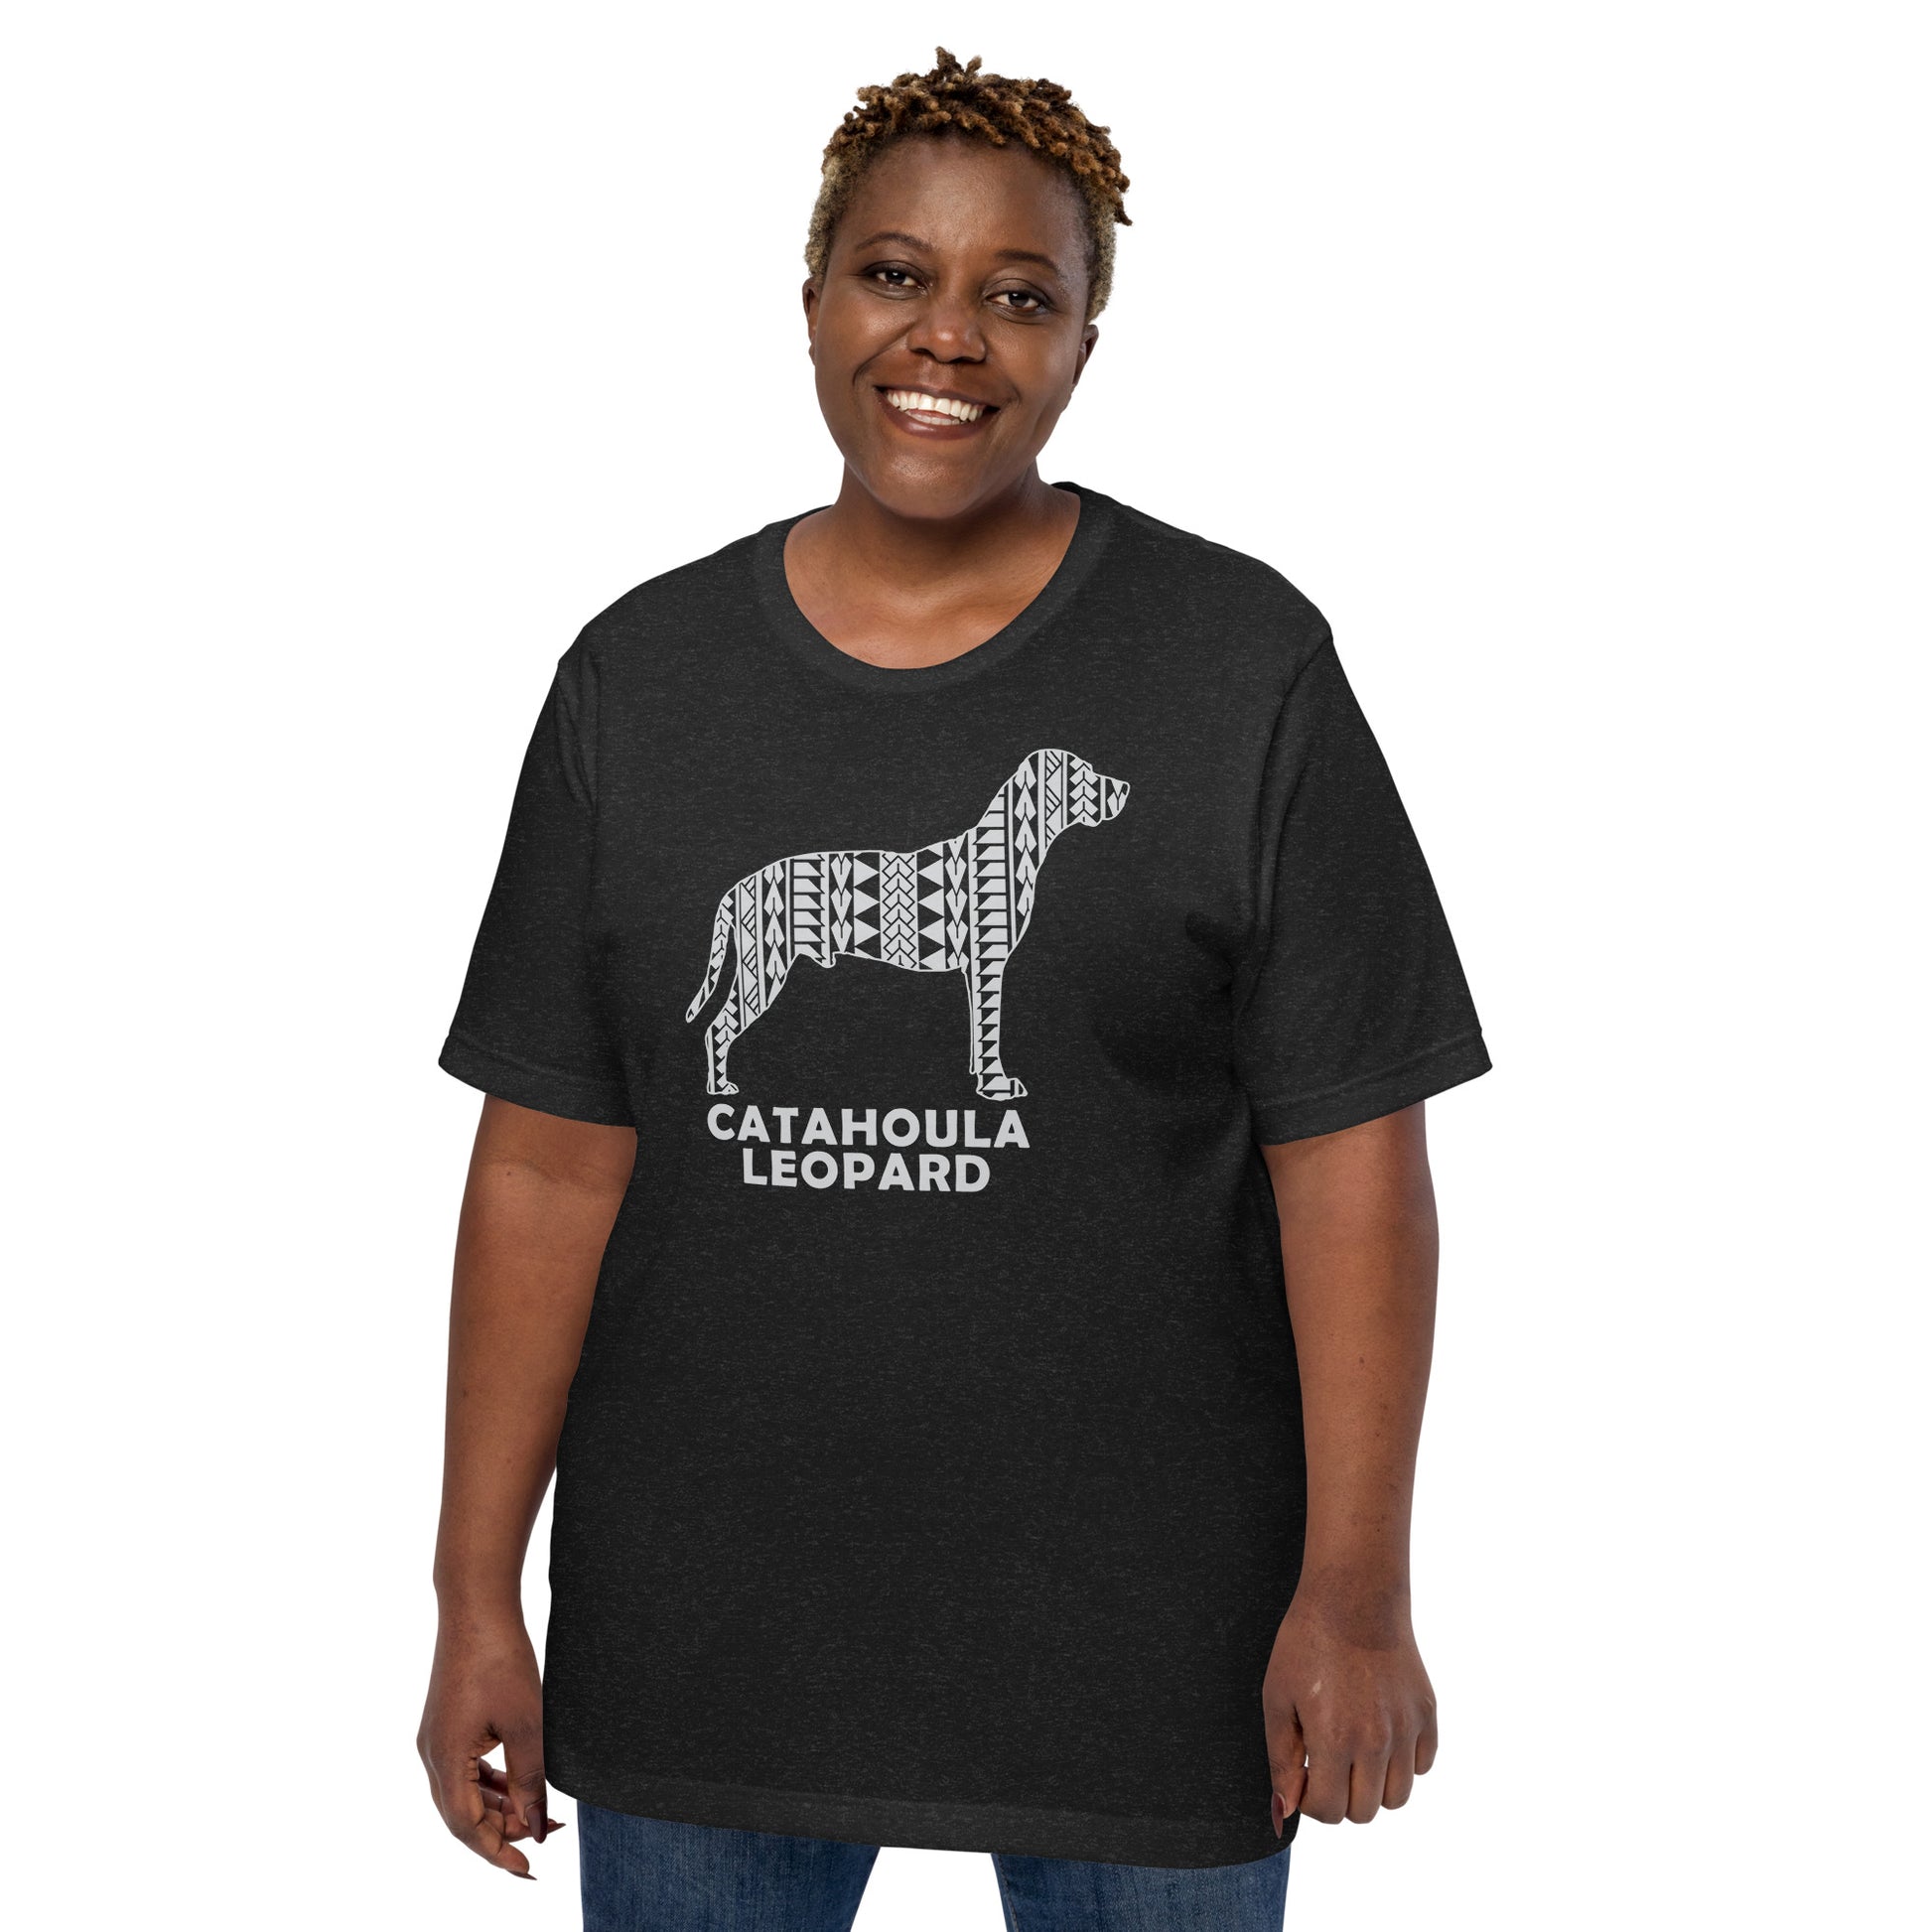 Catahoula Leopard Polynesian t-shirt heather by Dog Artistry.